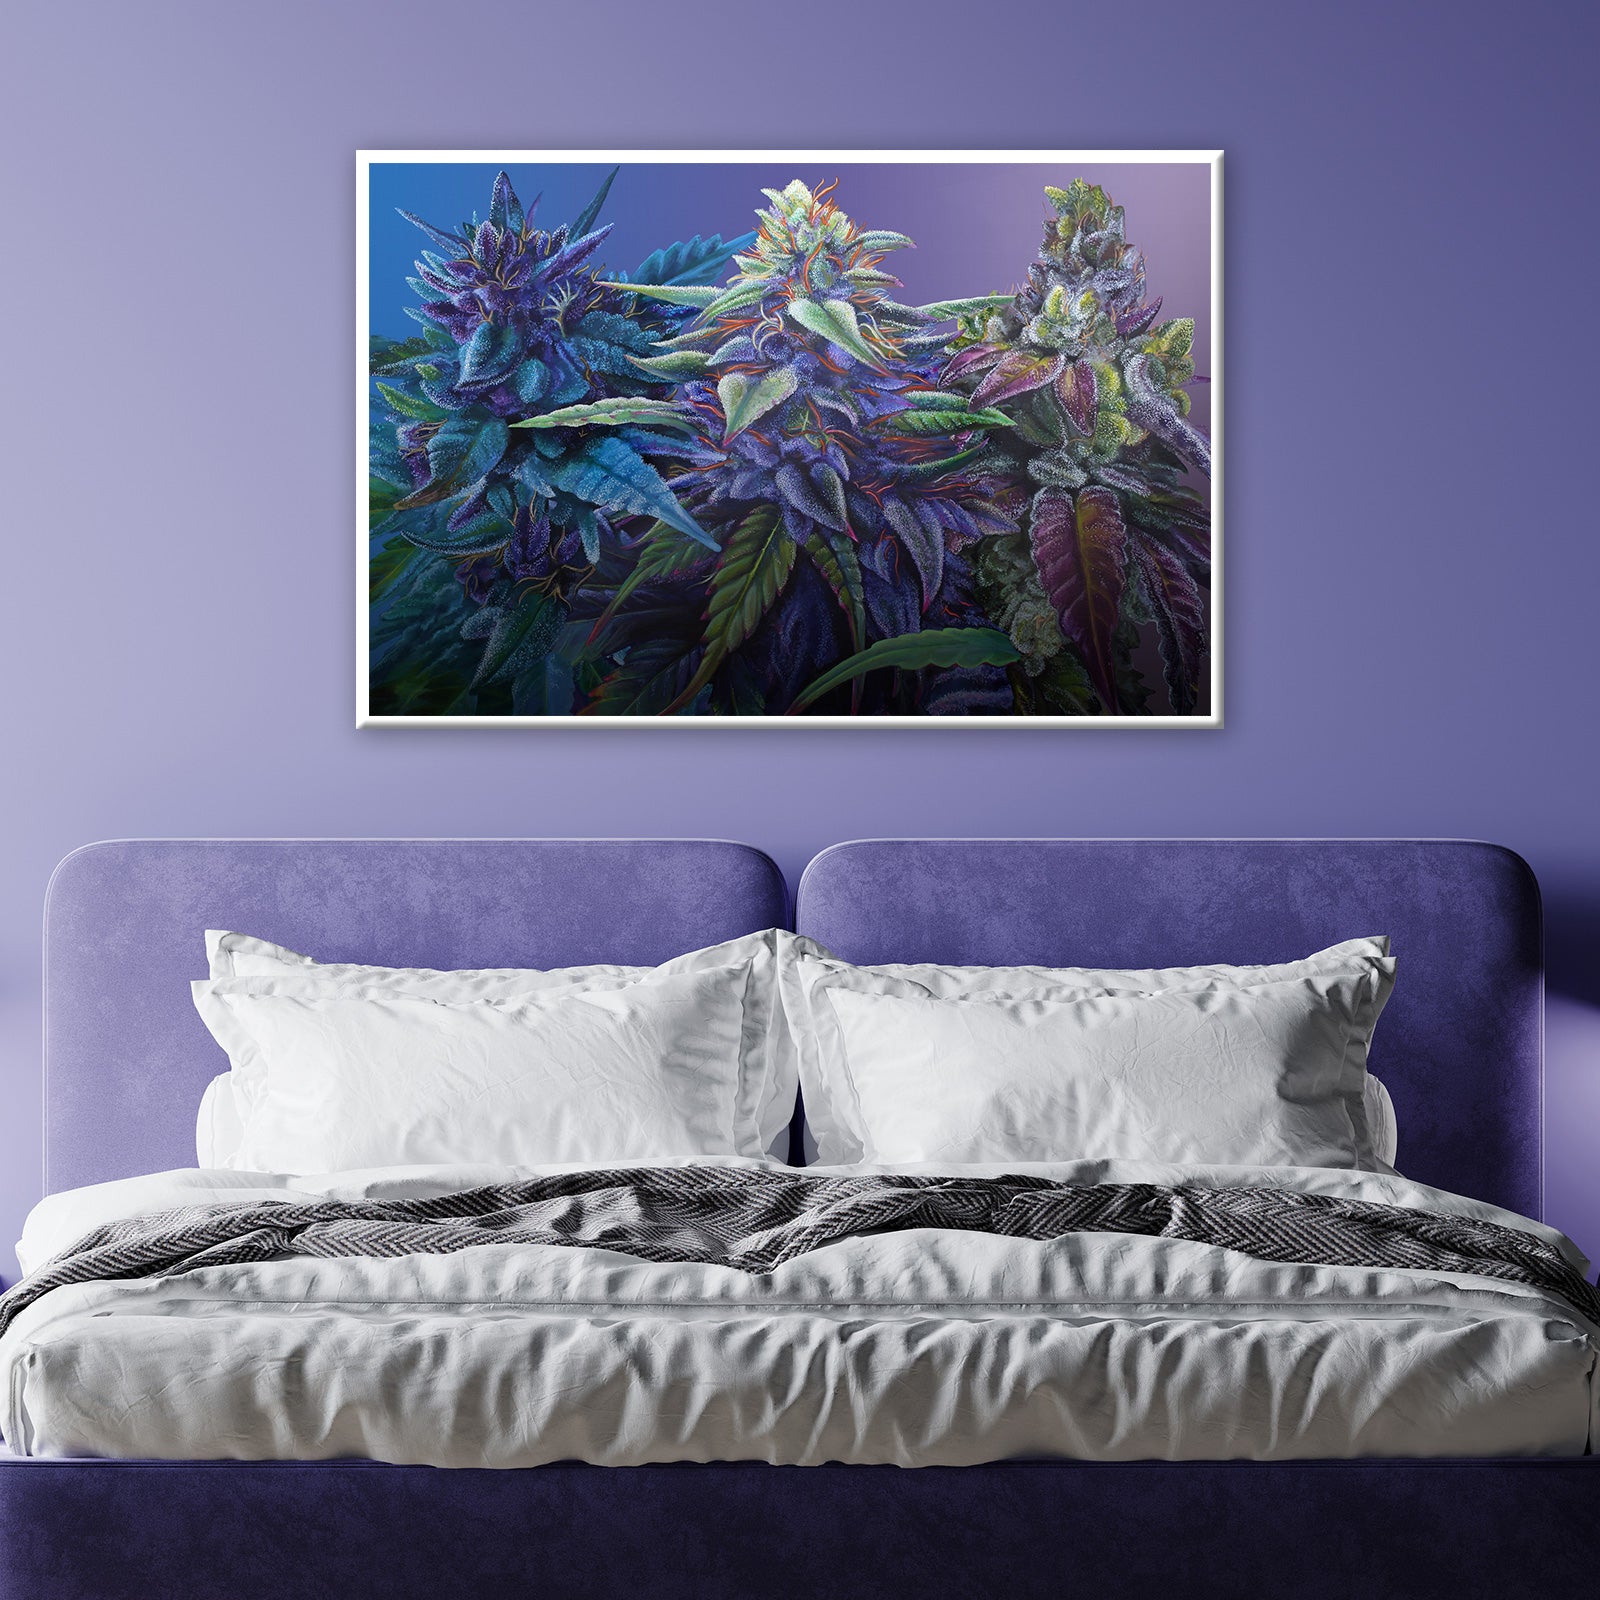 Create a Mesmerizing Purple Aesthetic with Cannabis Art